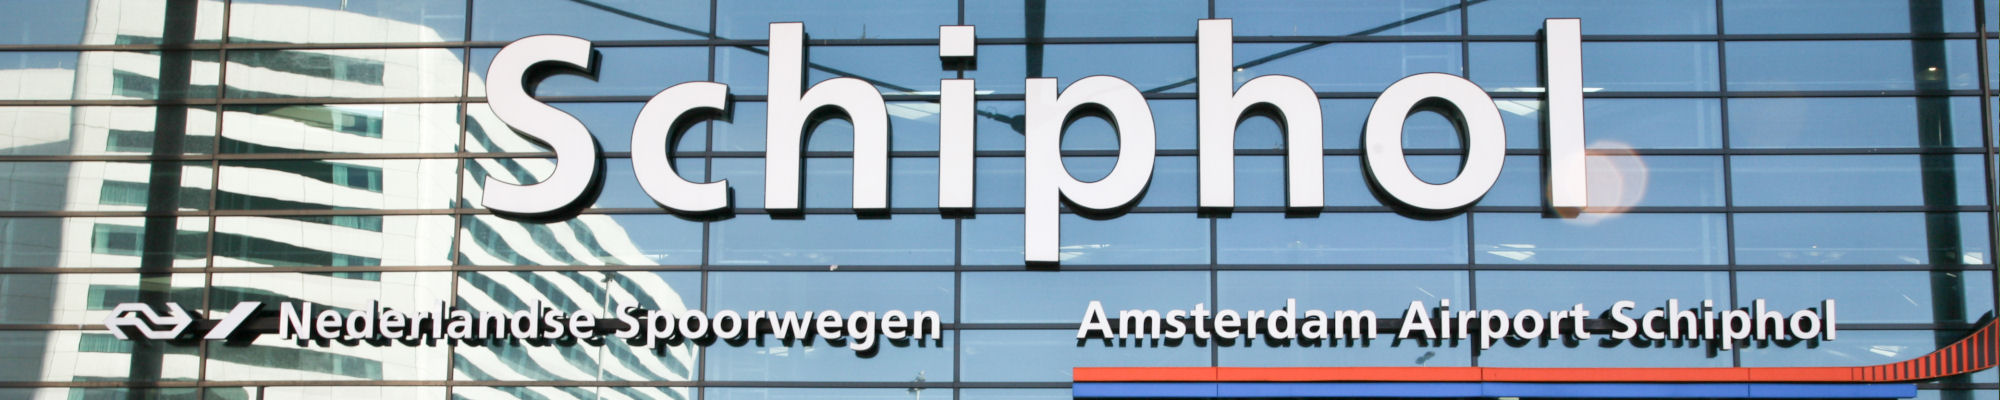 images/slides/schiphol-international-airport-amsterdam.jpg